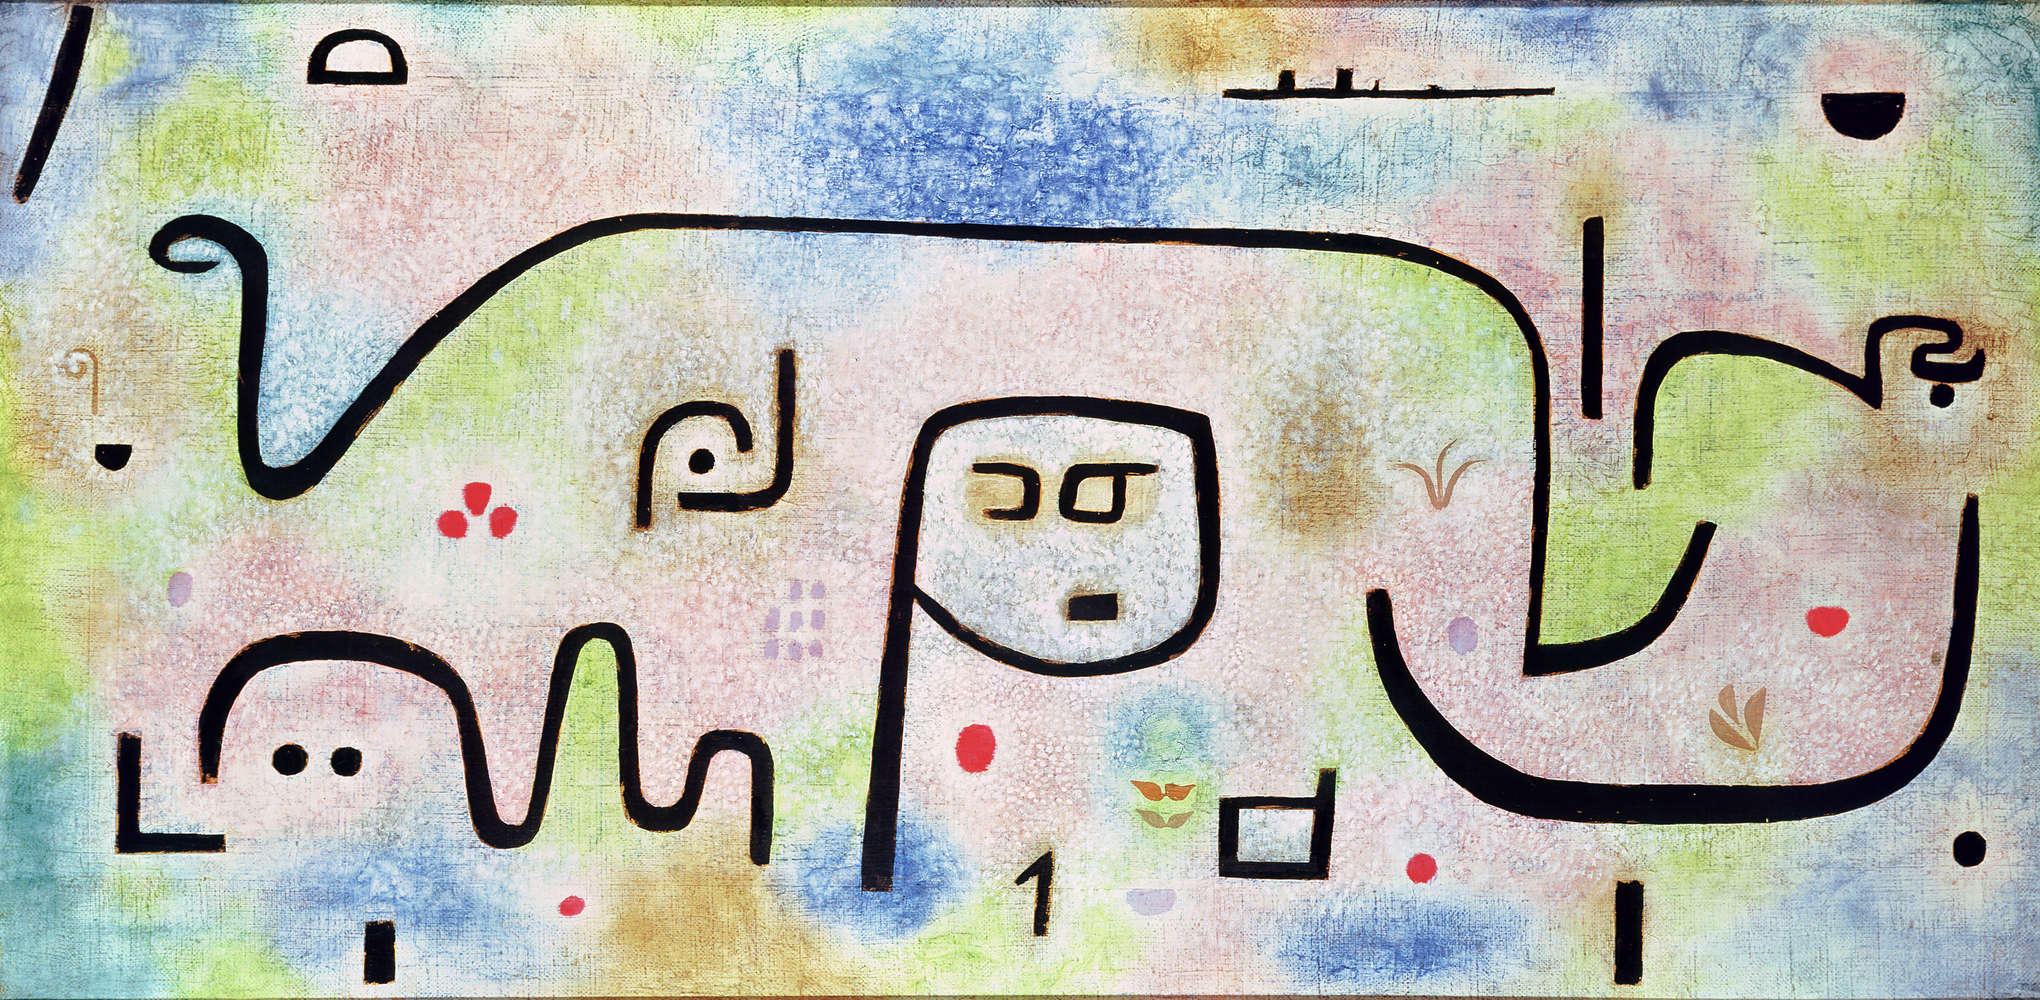             Photo wallpaper "Insula Dulcamara" by Paul Klee
        